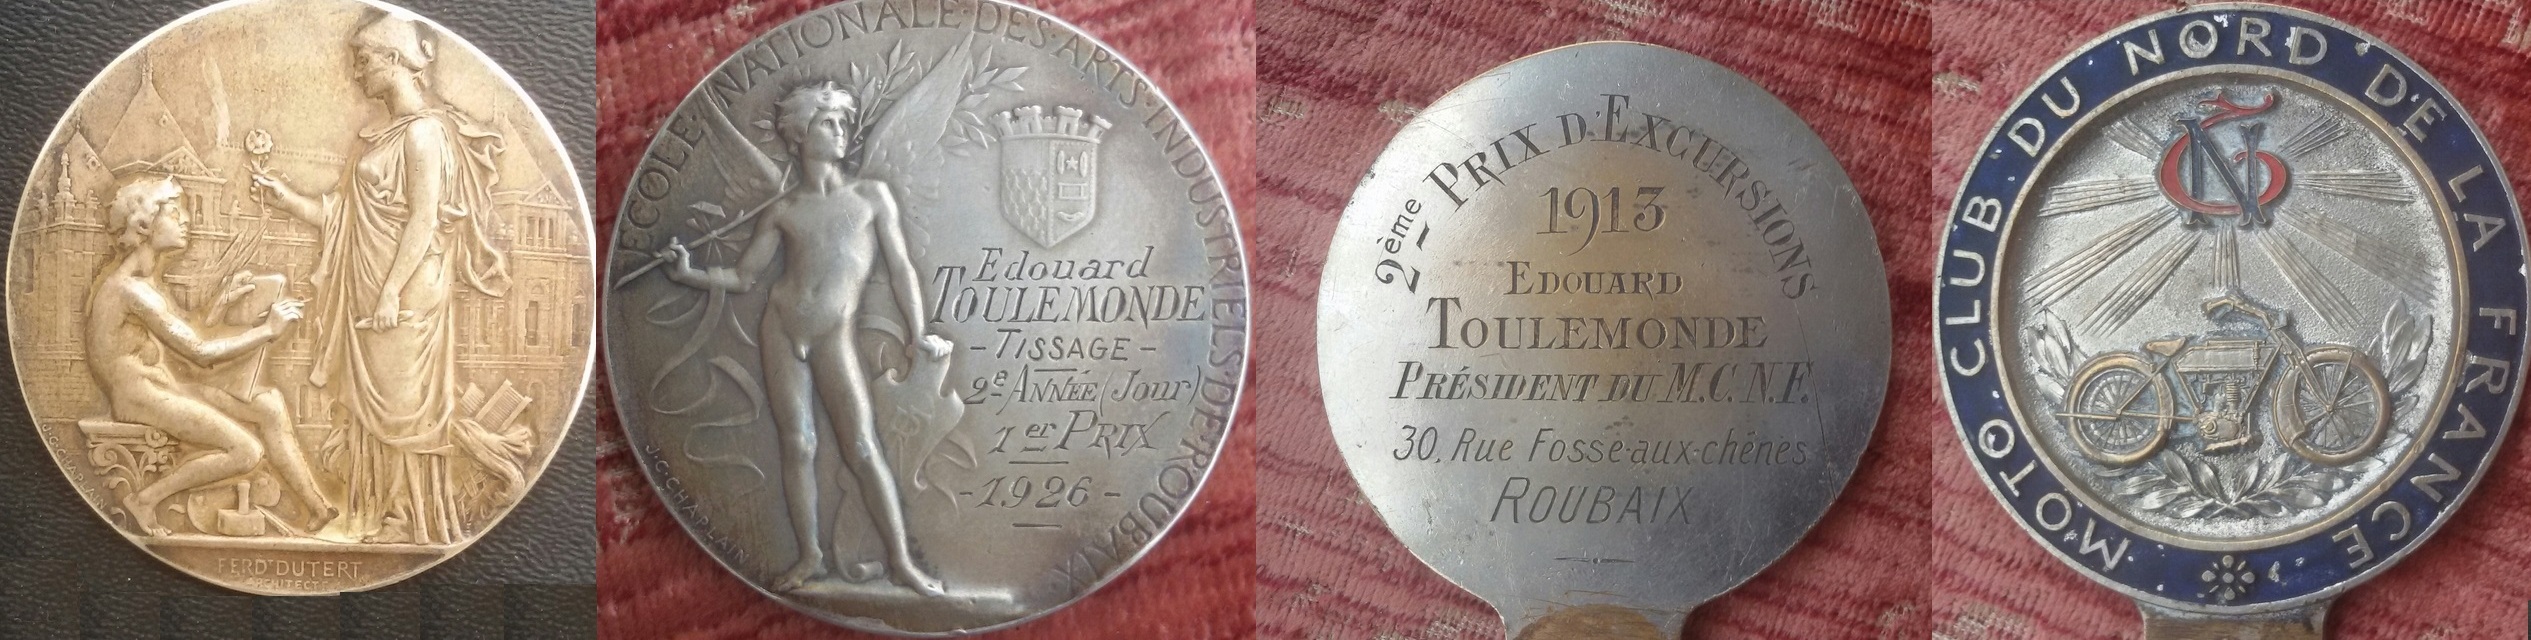 Toulemonde-Edouard-medailles.jpg